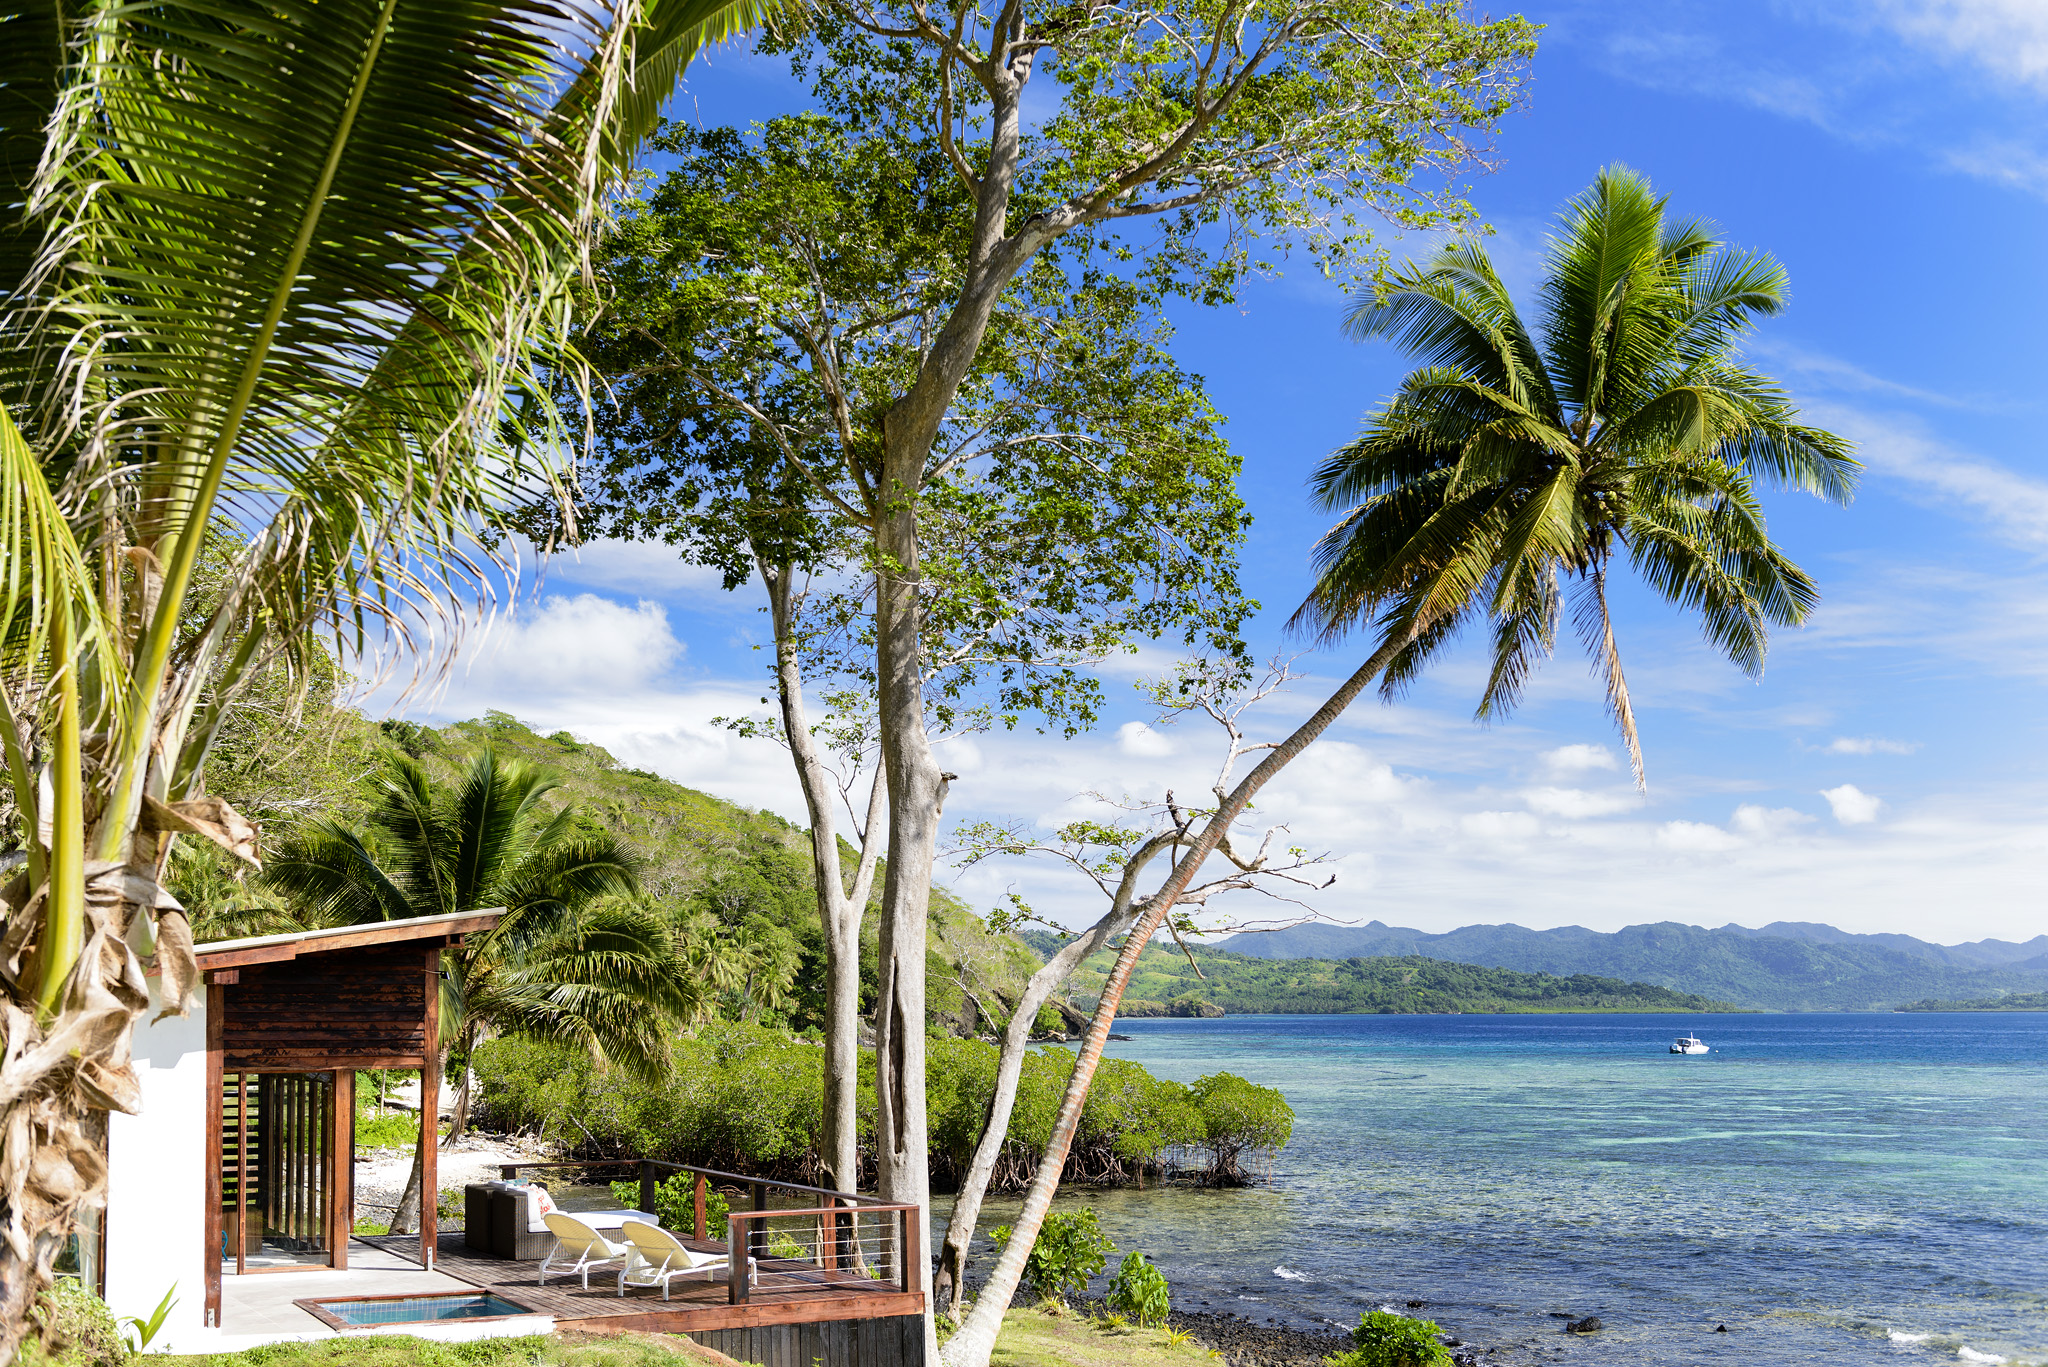 Two-bedroom Villa views and deck, The Remote Resort Fiji Islands